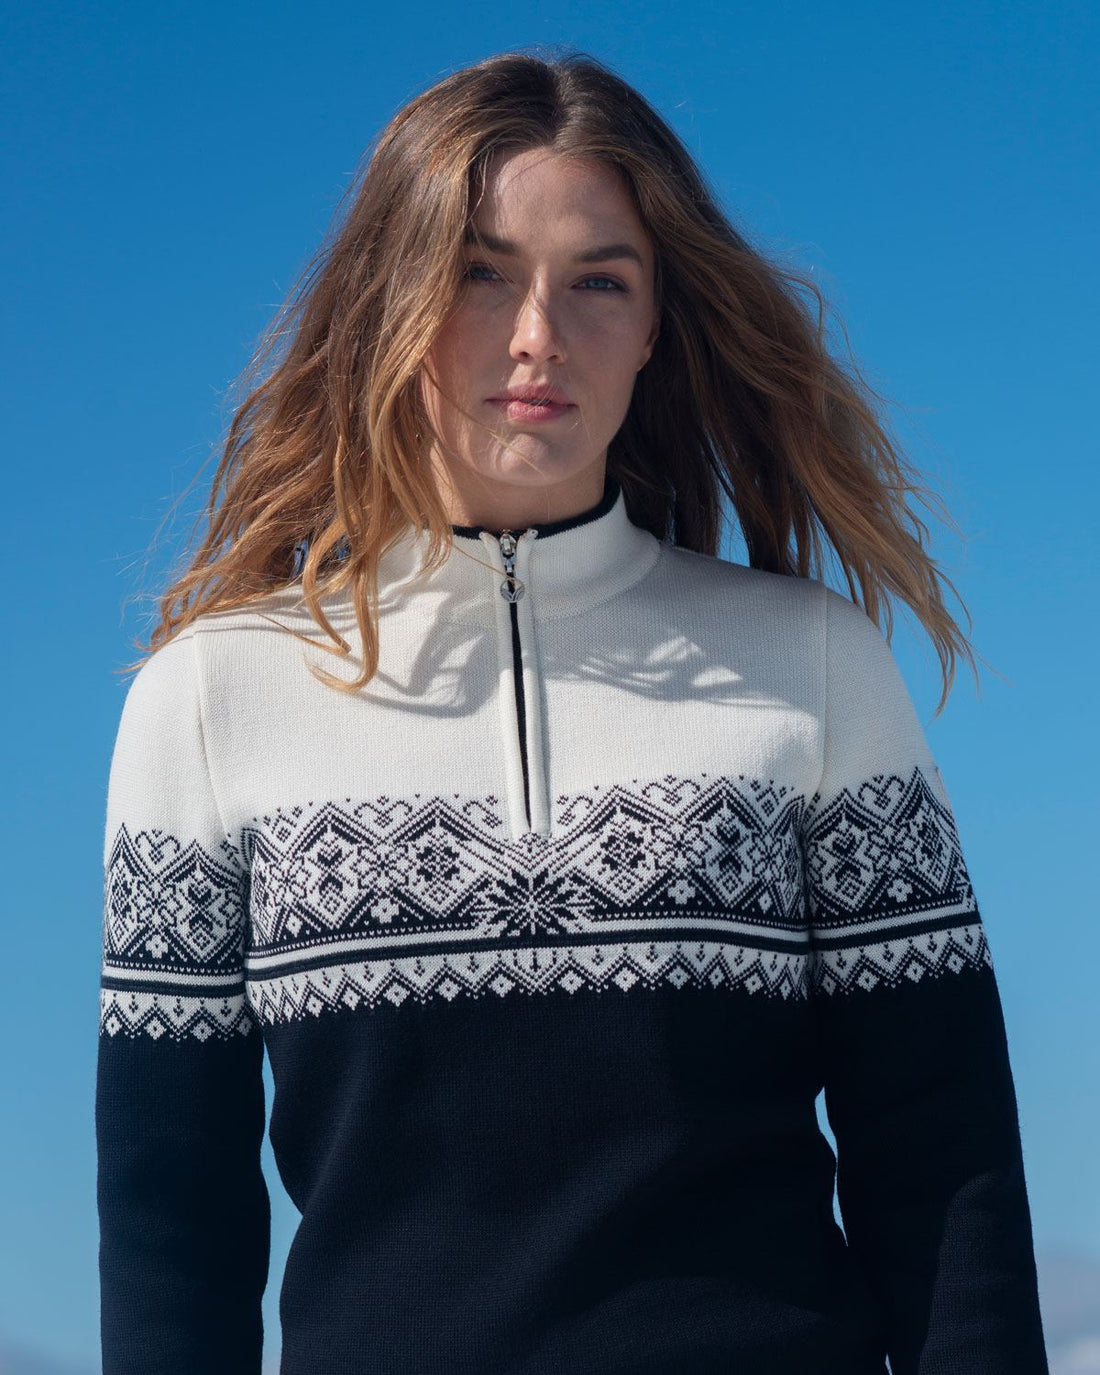 Dale of Norway - Moritz Women's Sweater - Black